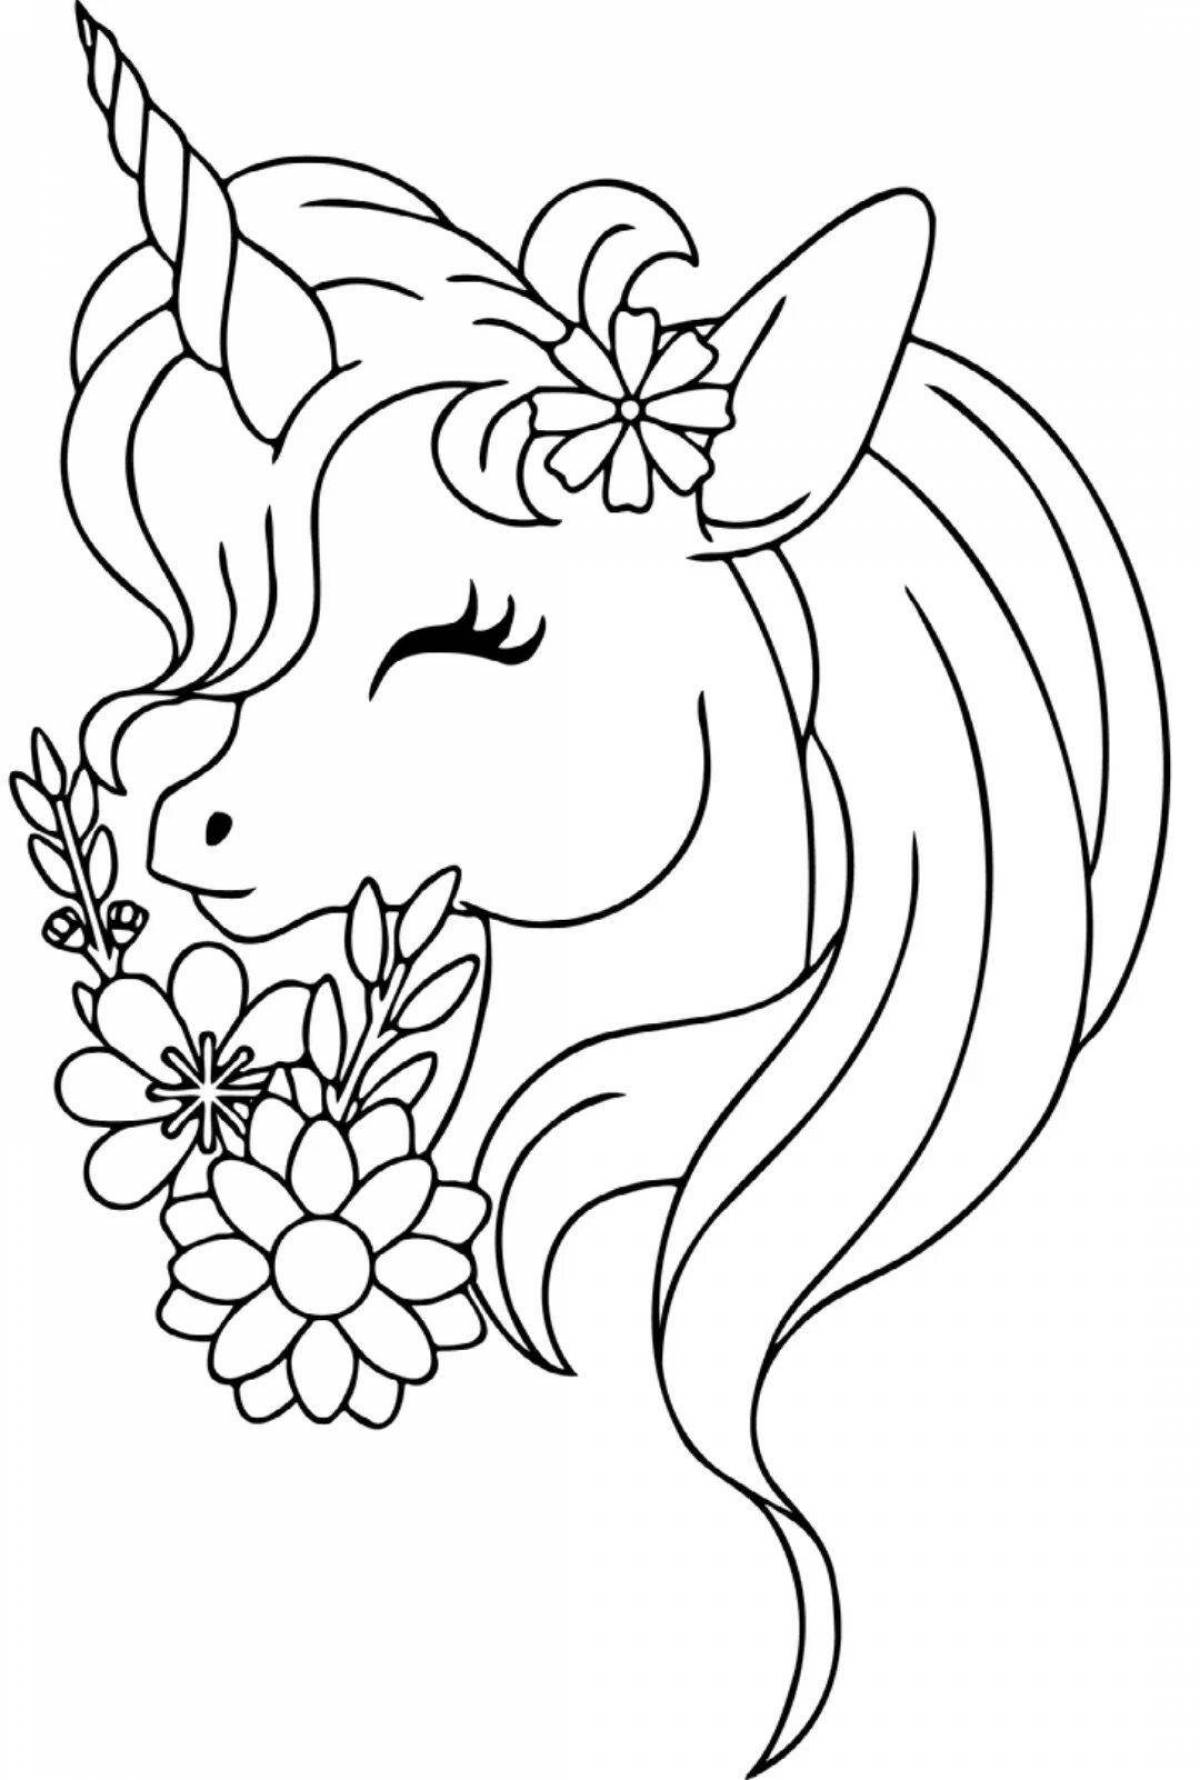 Splendid doggy unicorn coloring page